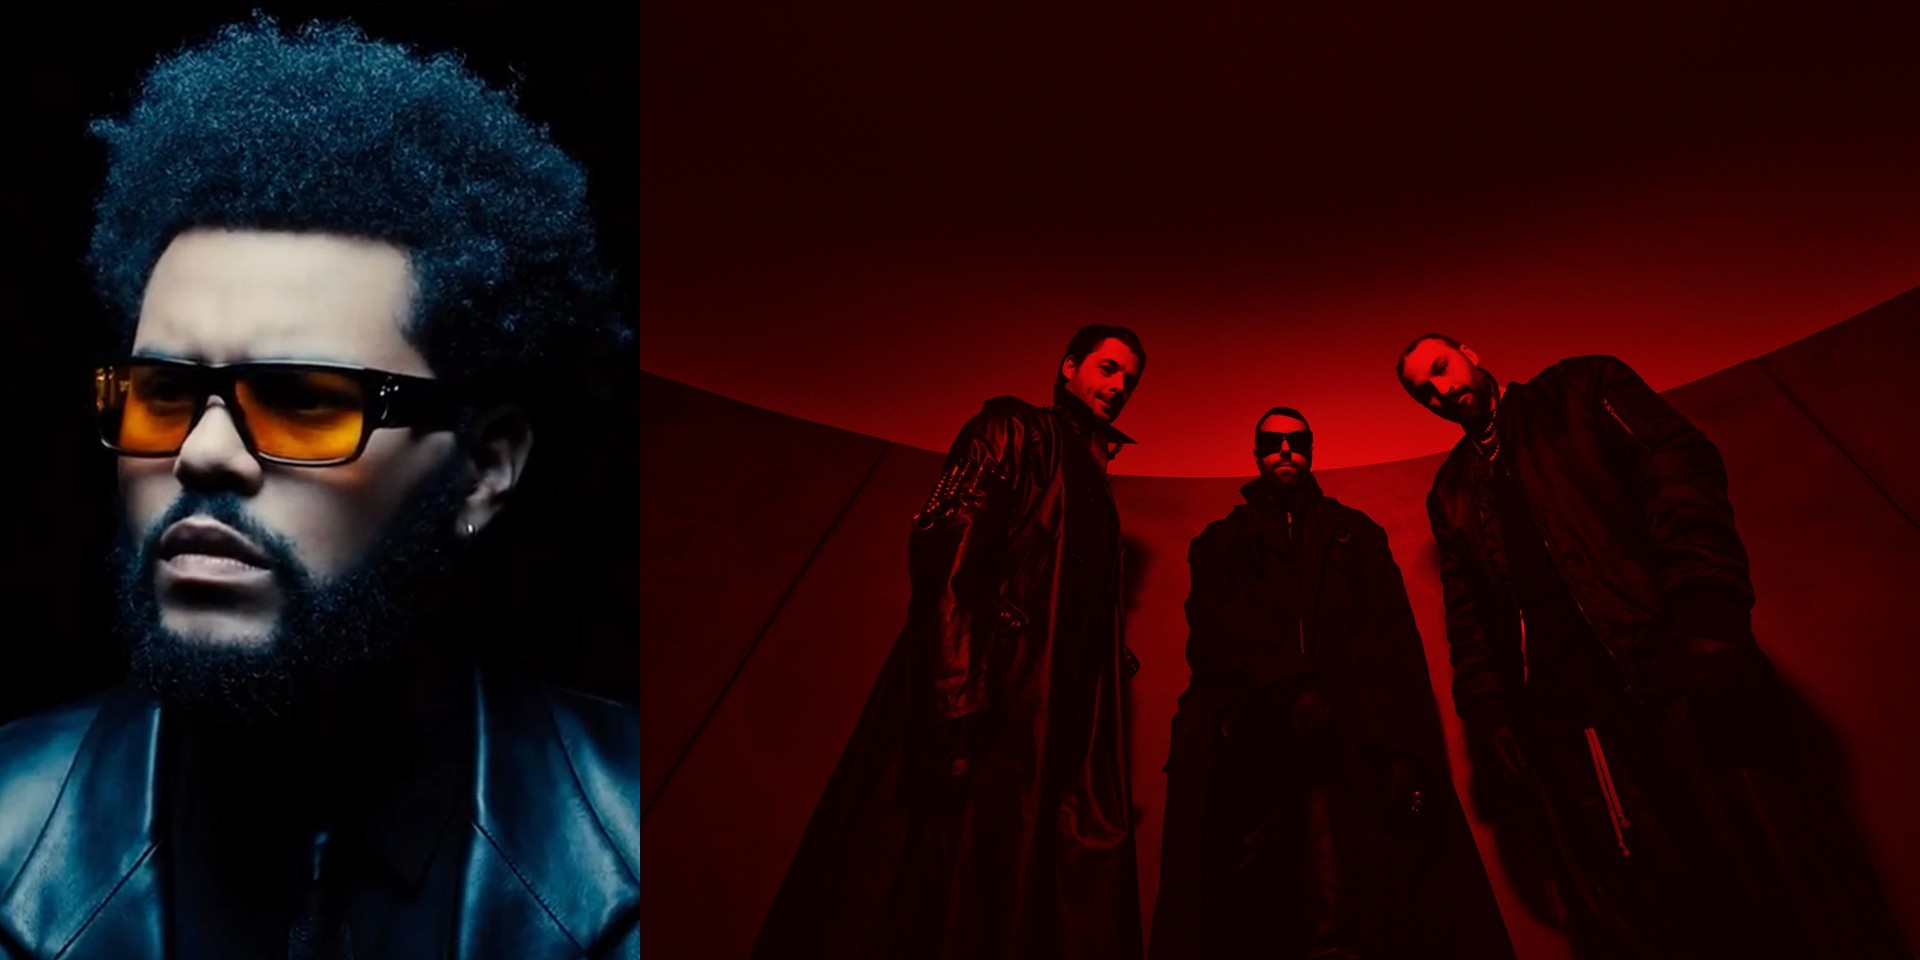 The Weeknd and Swedish House Mafia to headline Coachella 2022 